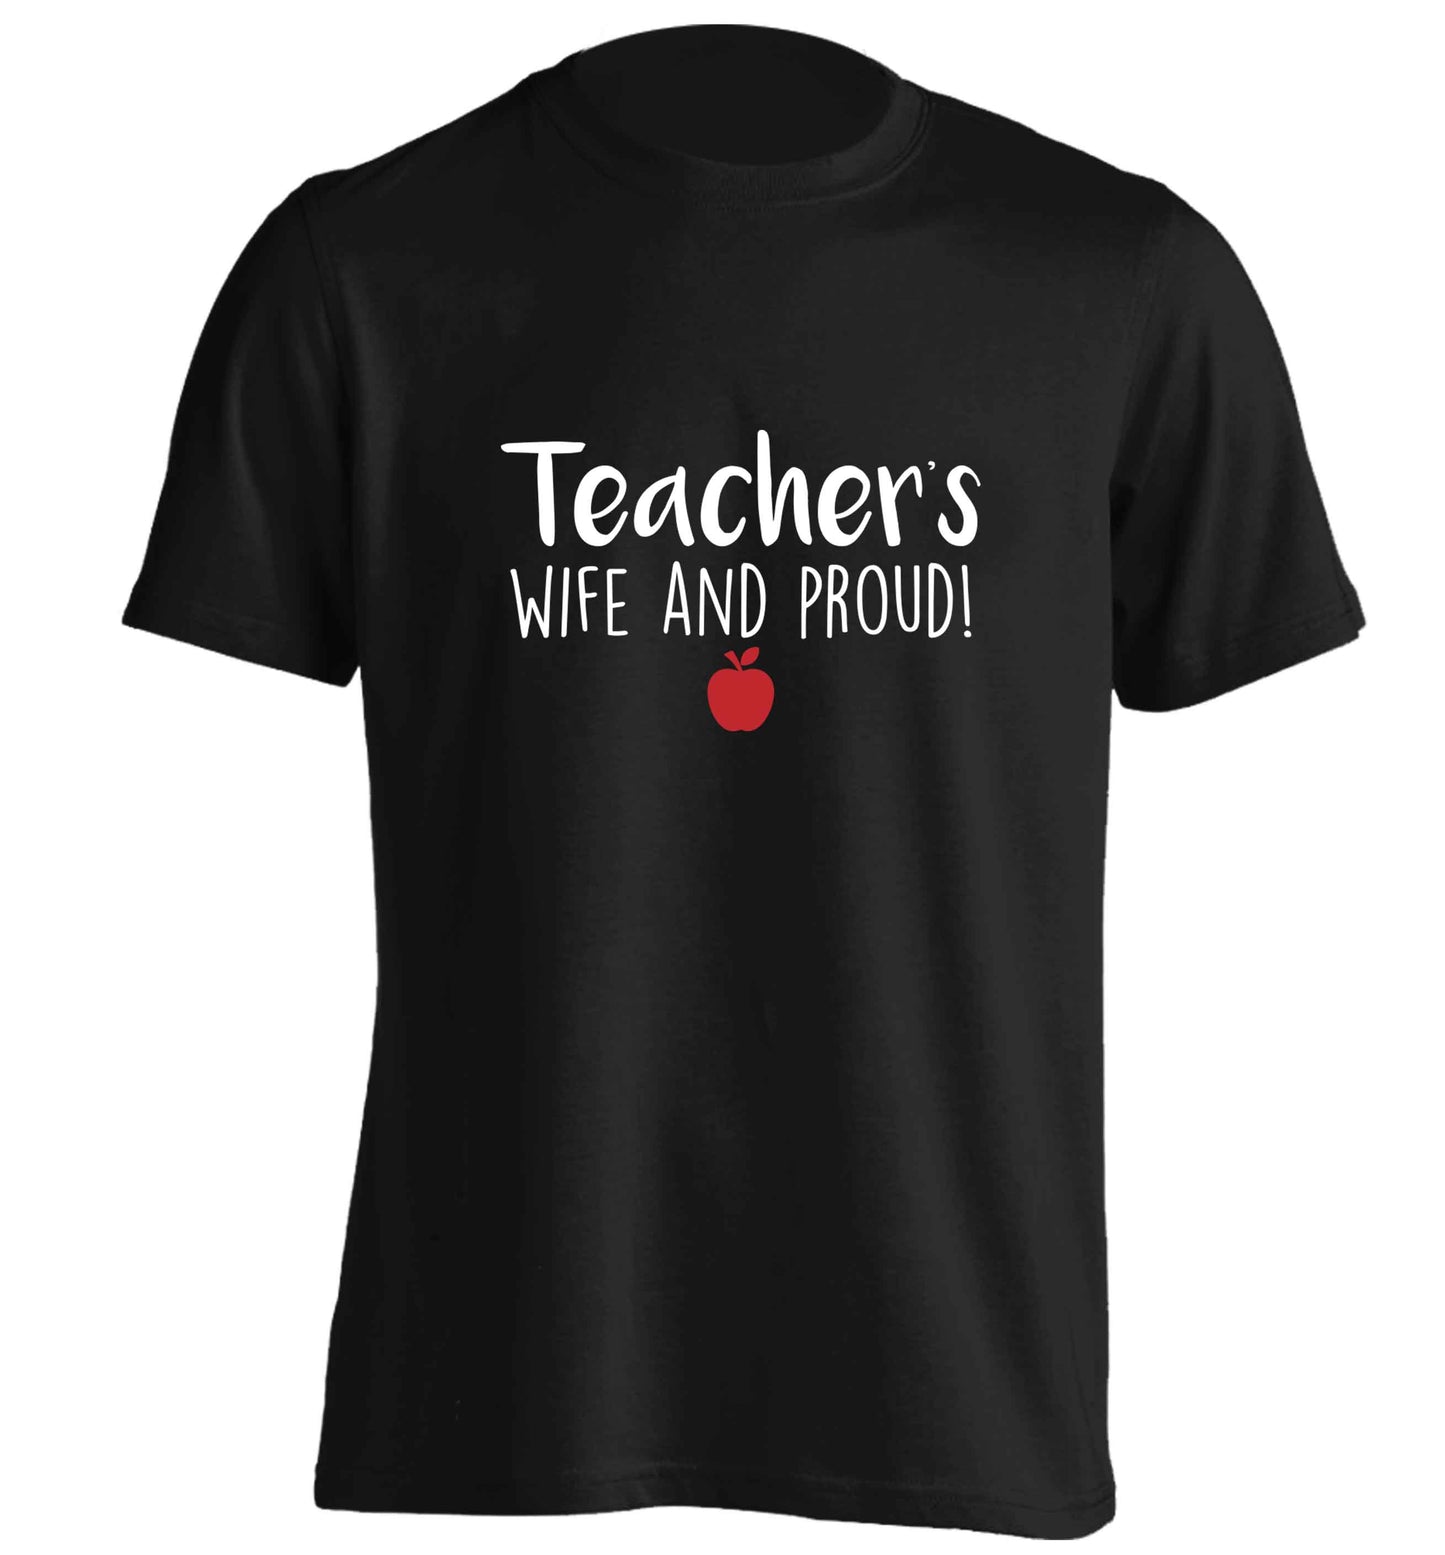 Teachers wife and proud adults unisex black Tshirt 2XL